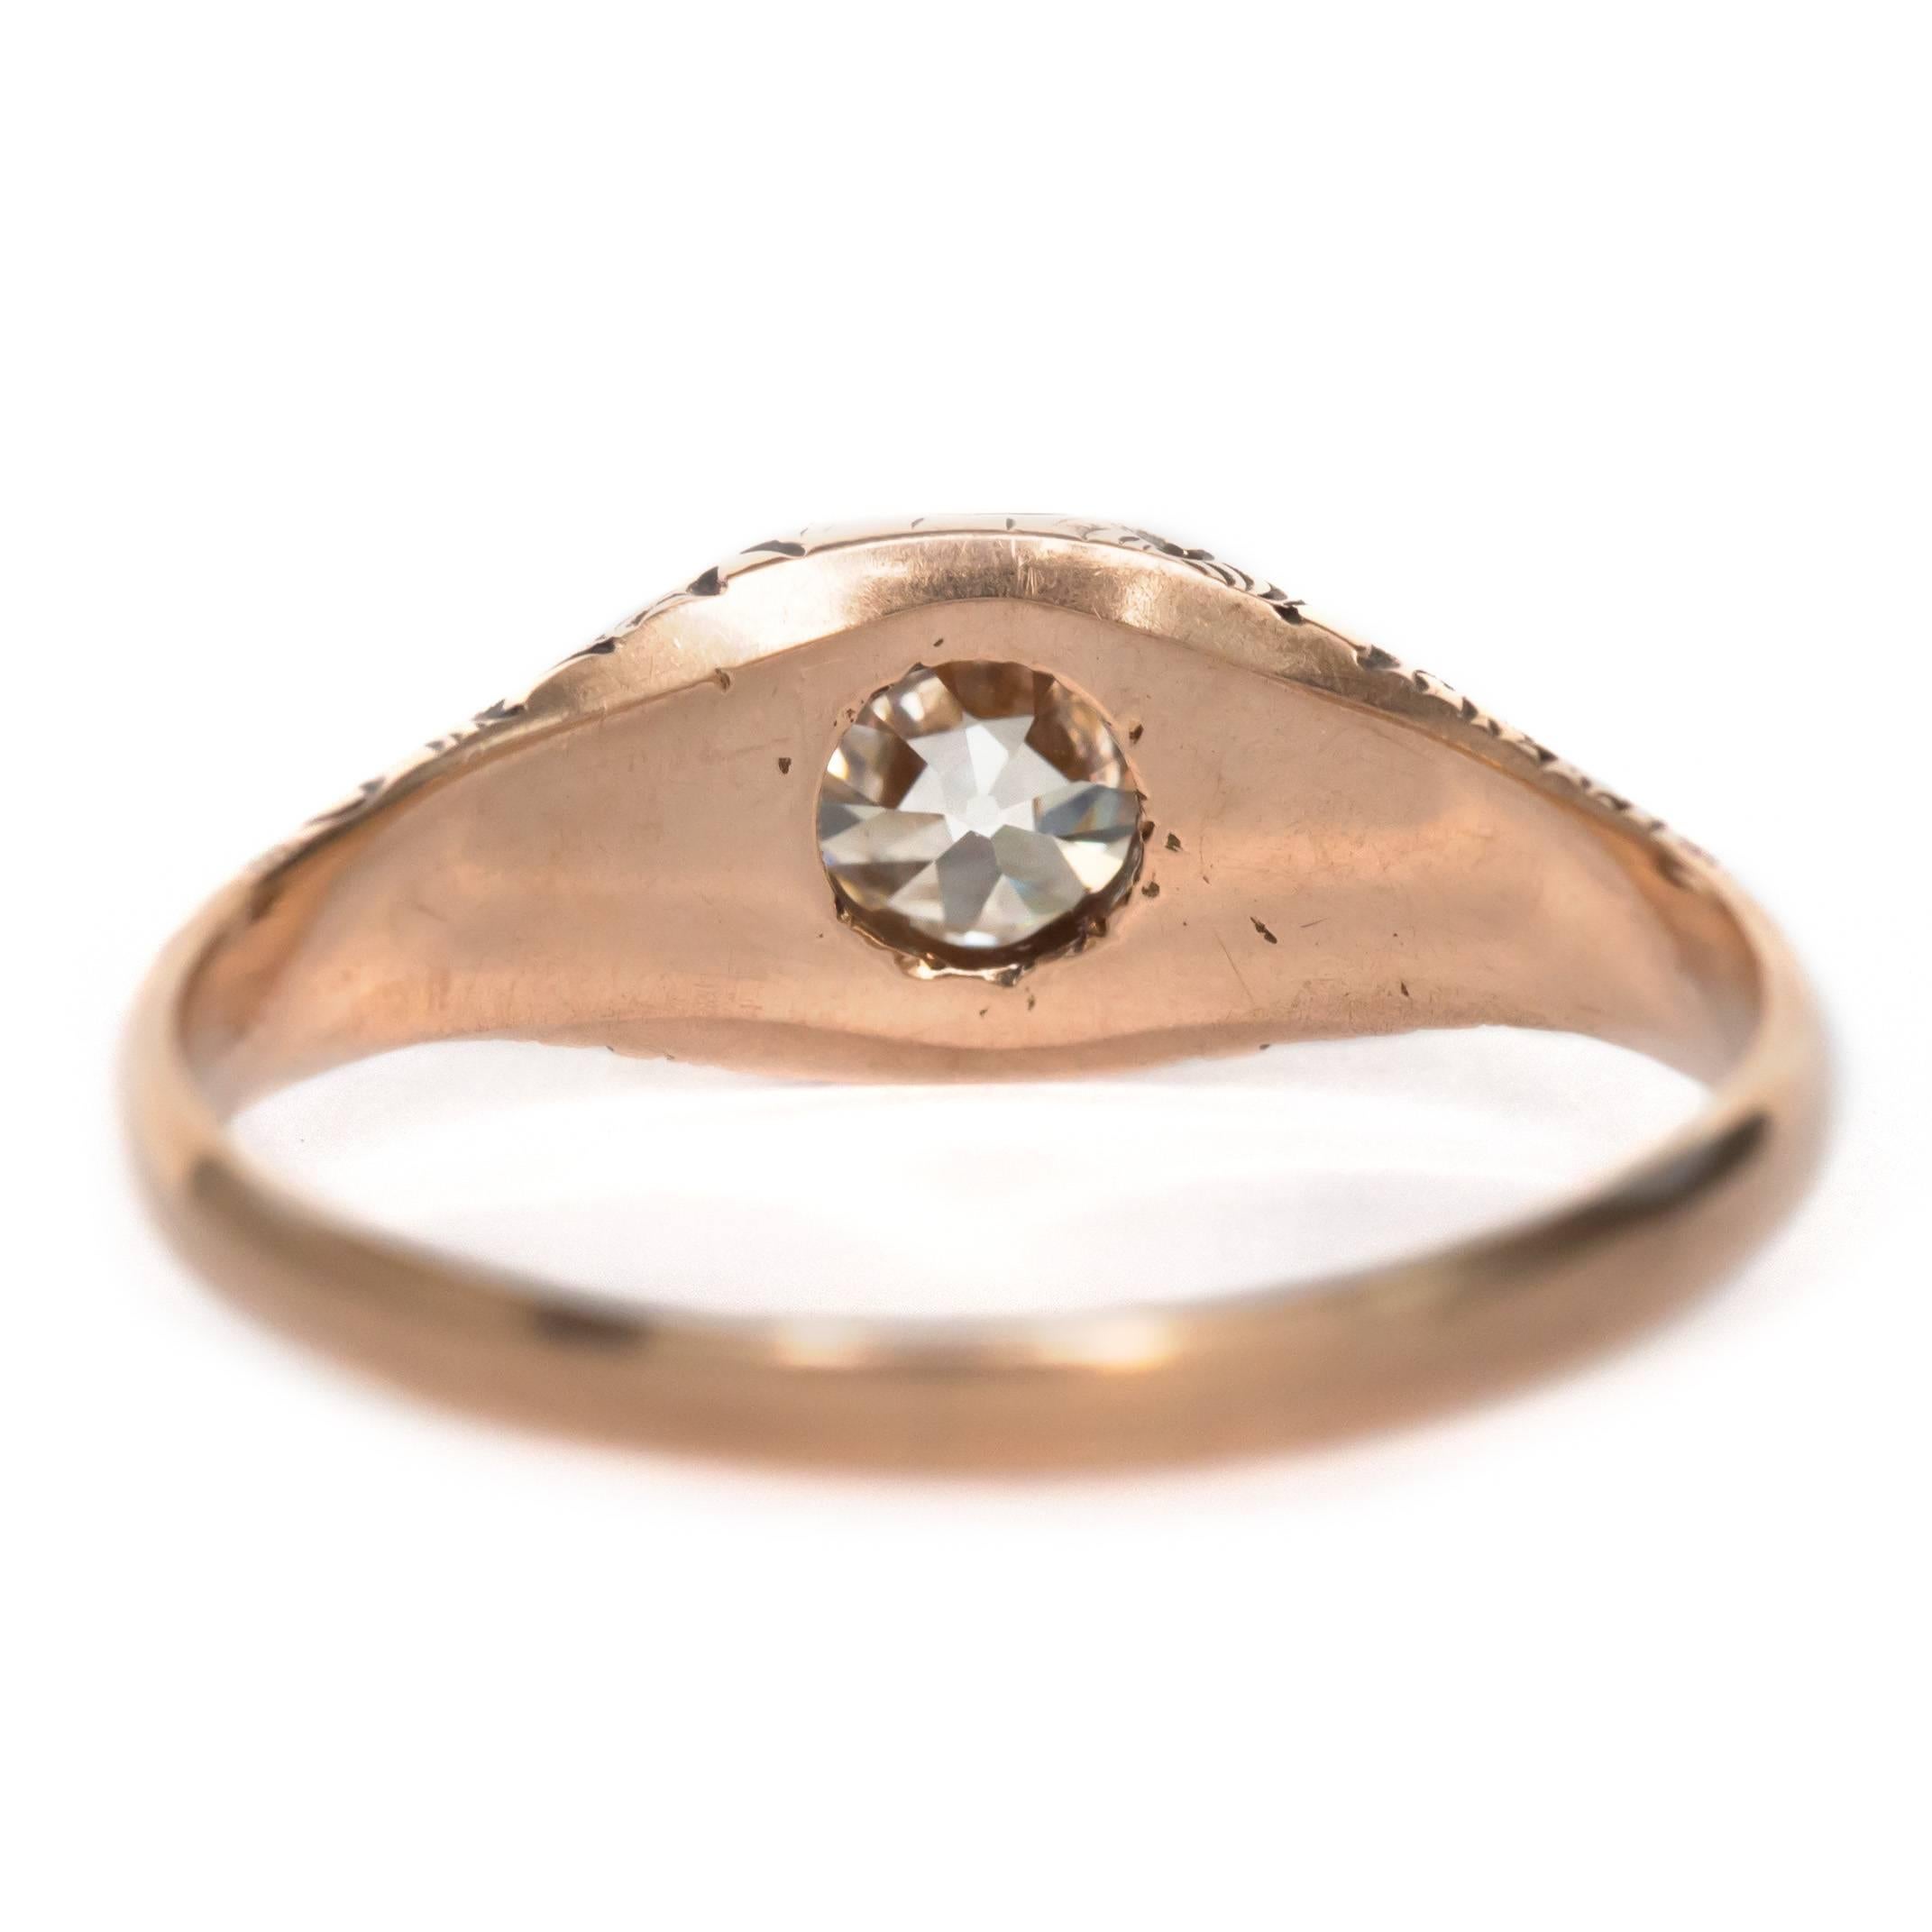 Women's 1900 Late Victorian 14 Karat Yellow Gold 0.86 Carat Diamond Engagement Ring